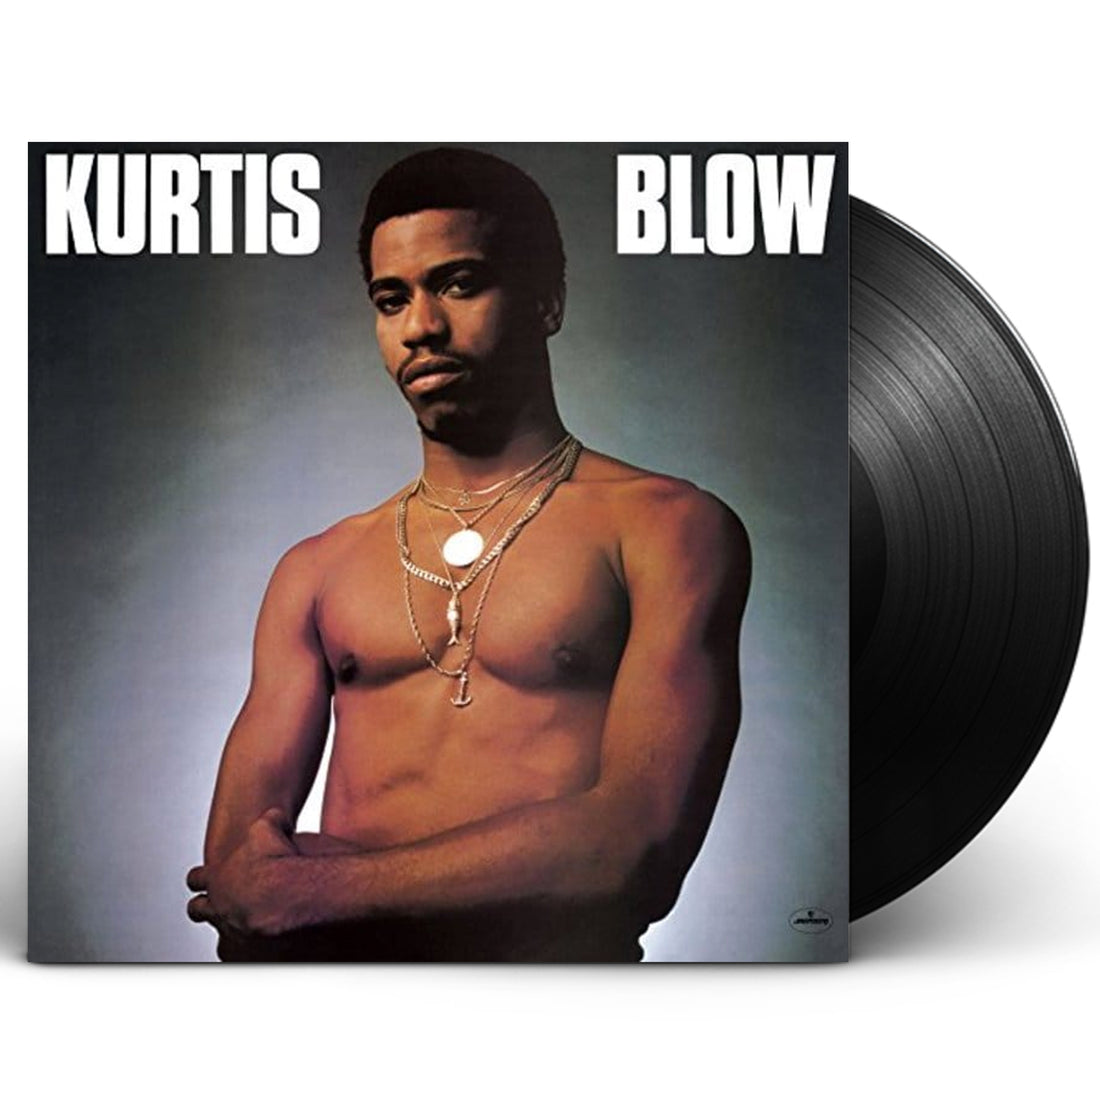 Kurtis Blow "Kurtis Blow" LP Vinyl